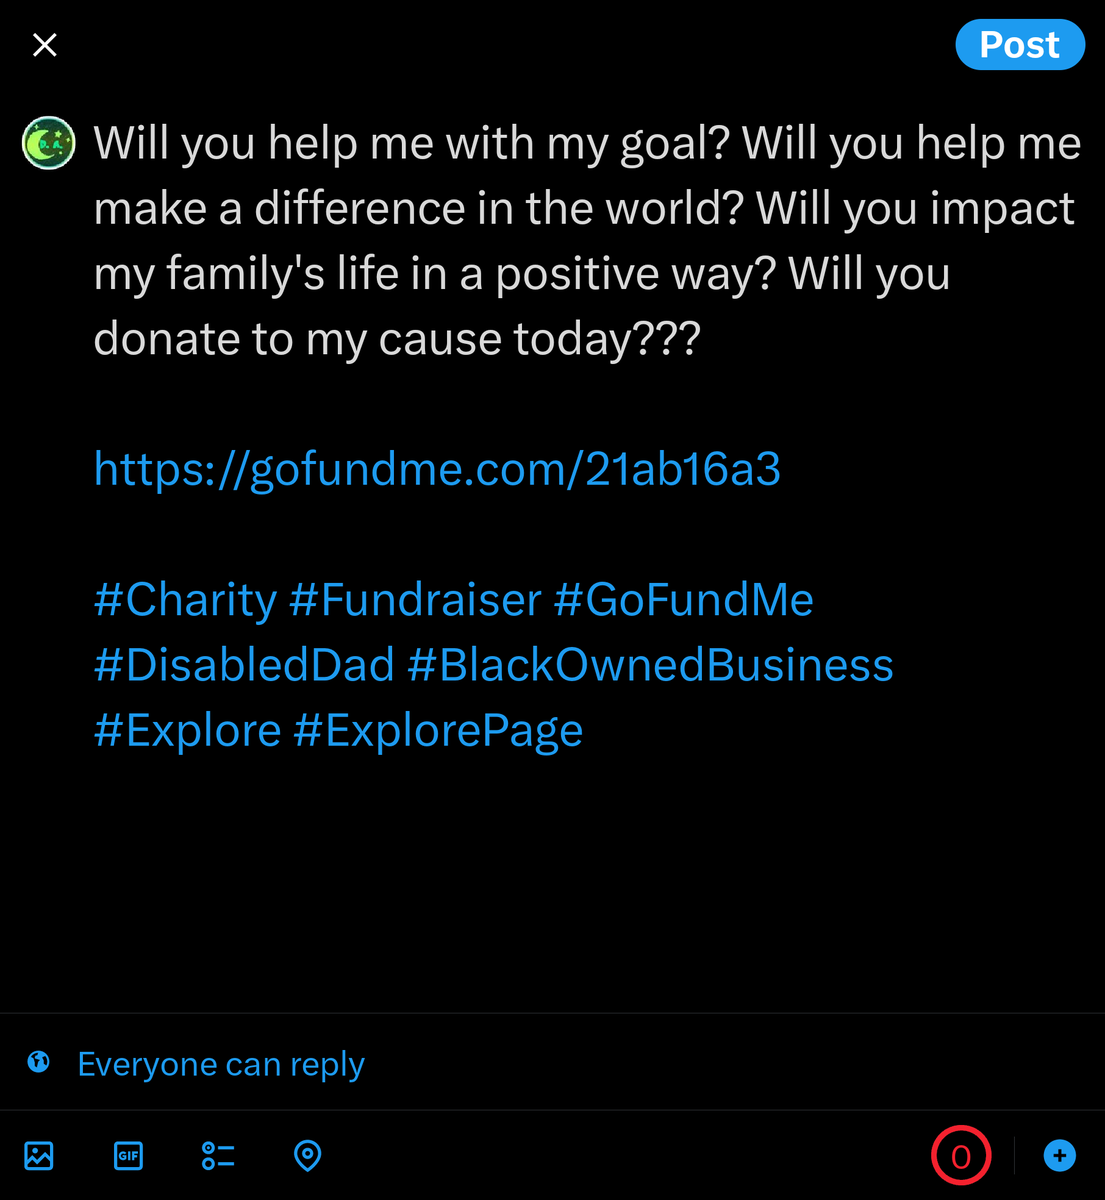 #Charity #Fundraiser #GoFundMe #DisabledDad #BlackOwnedBusiness #BuyBlack #Explore #ExplorePage